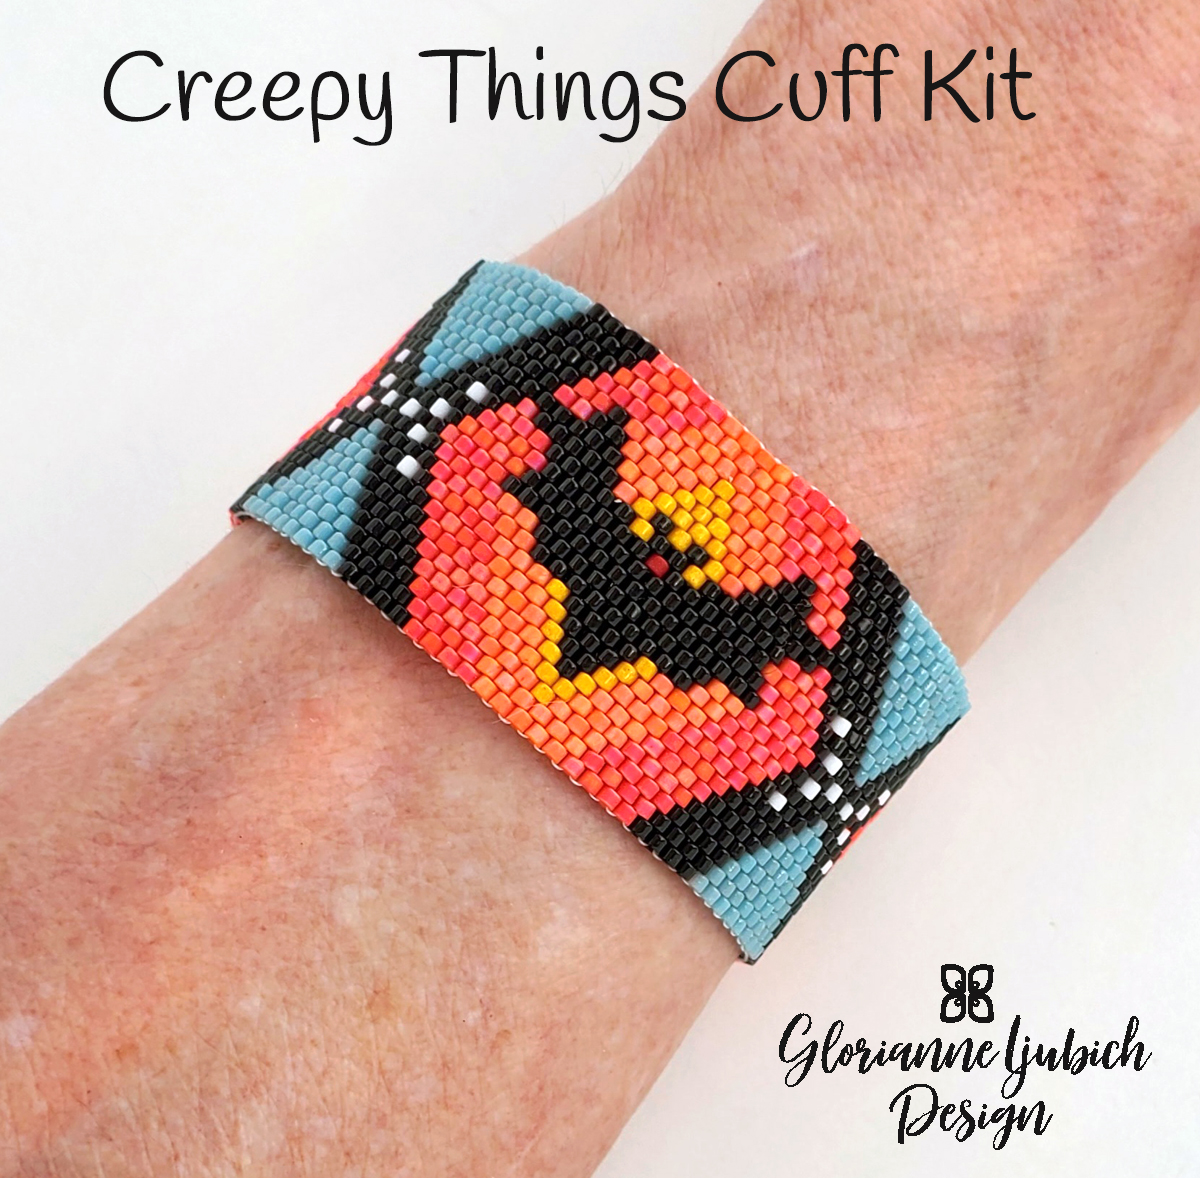 Creepy Things Peyote Cuff Kit